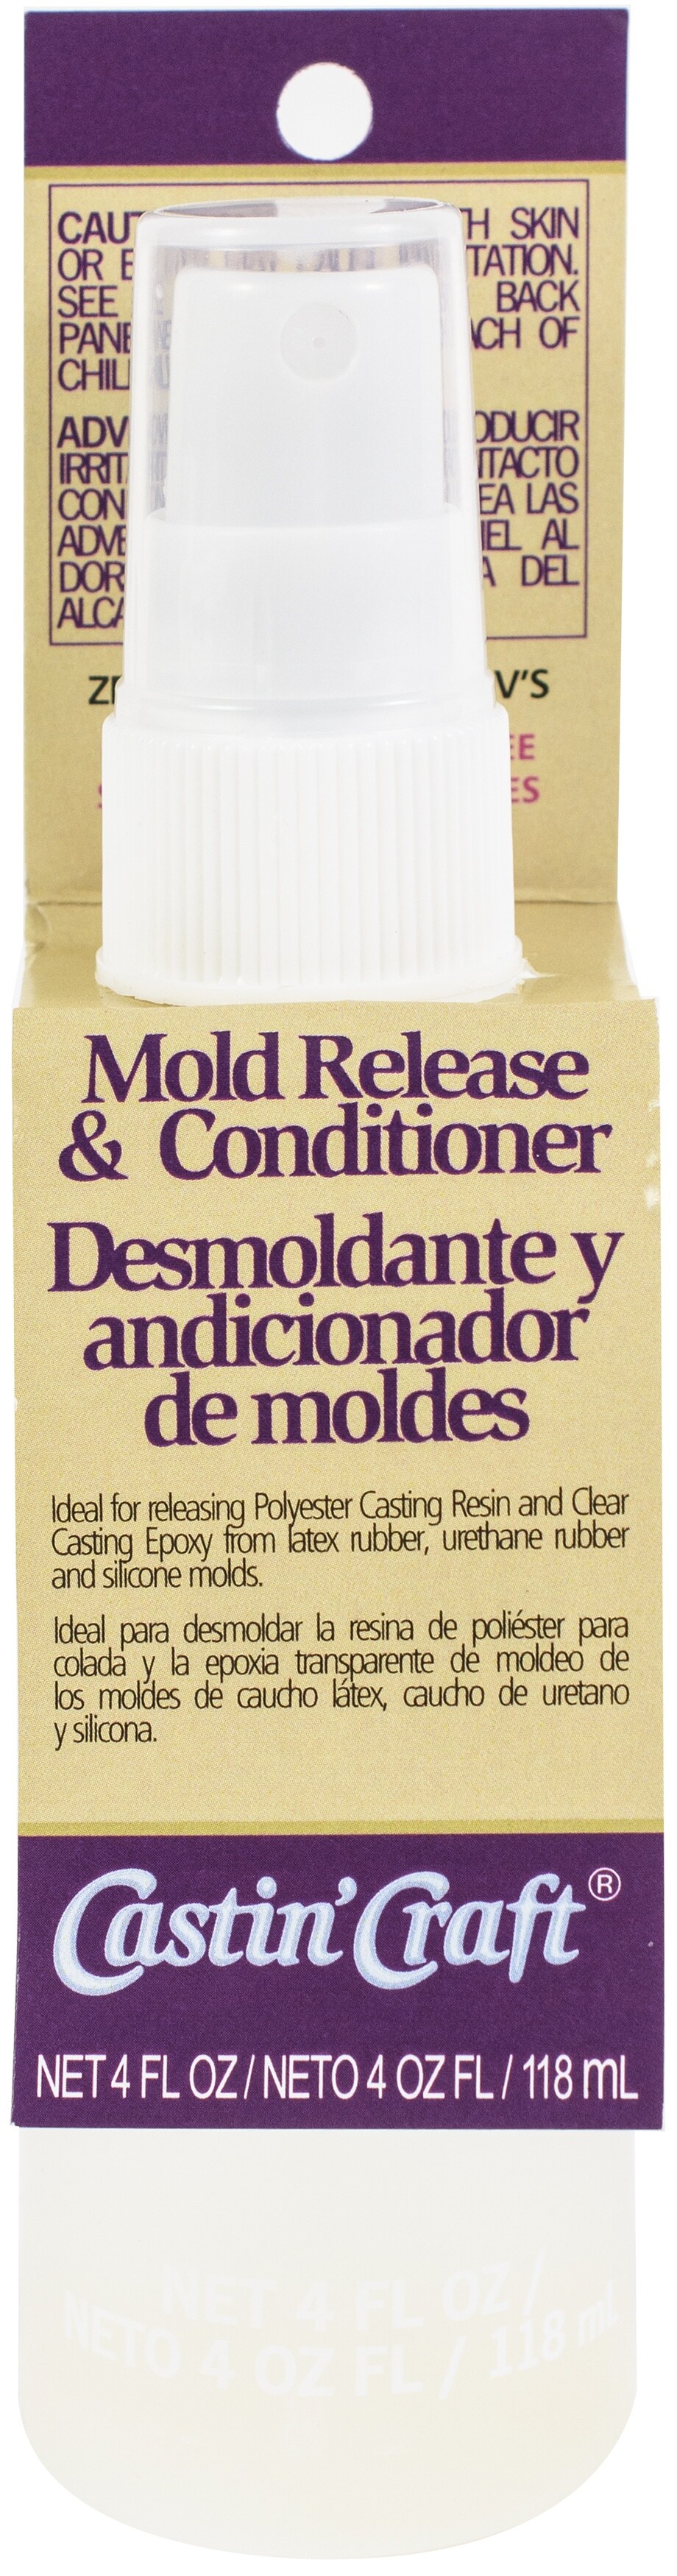 Mold Release & Conditioner